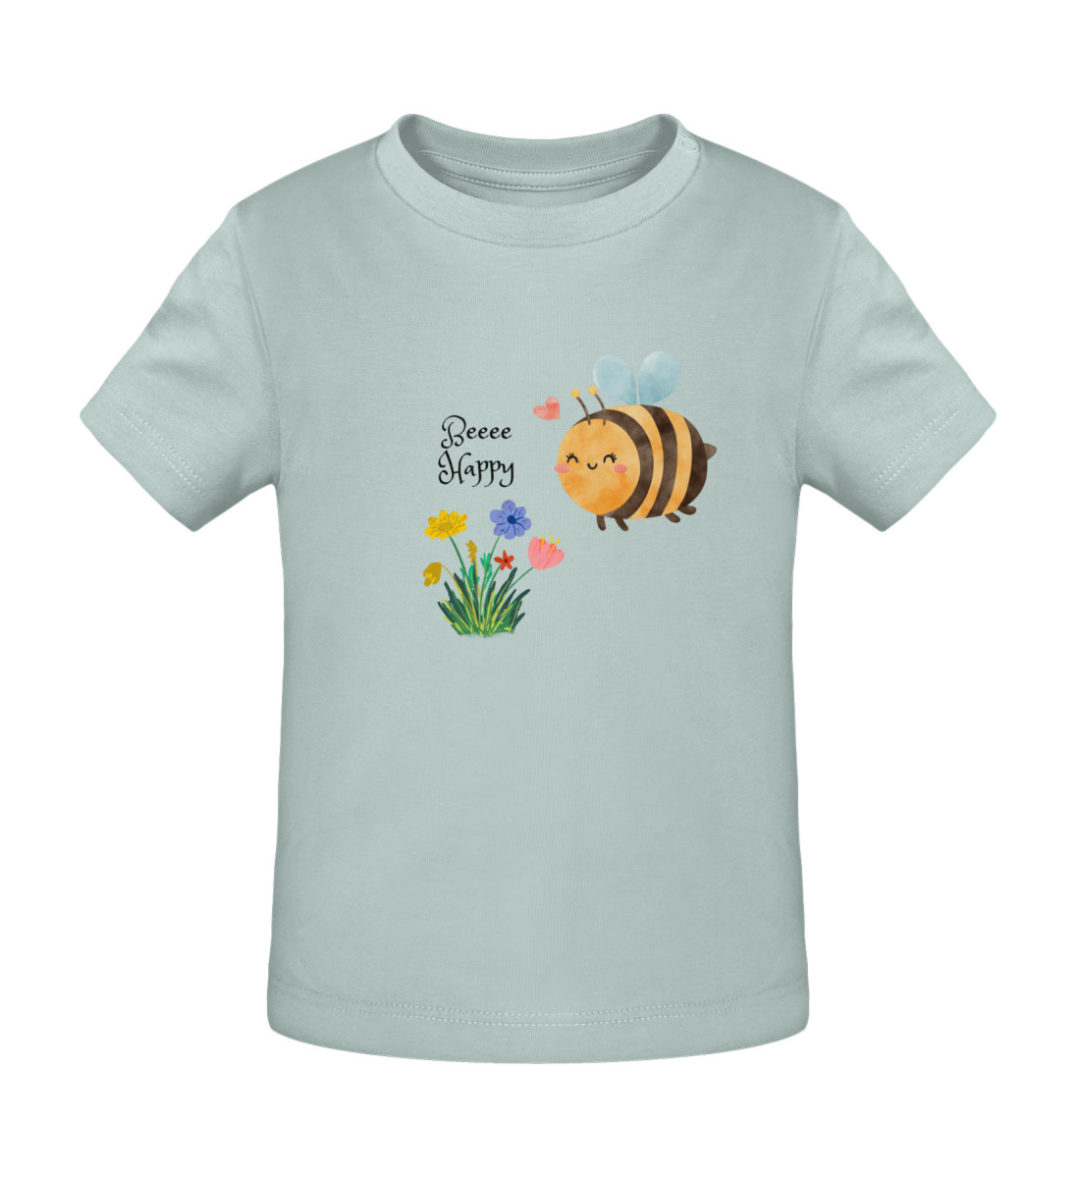 Beee happy - Baby Creator T-Shirt ST/ST-7033